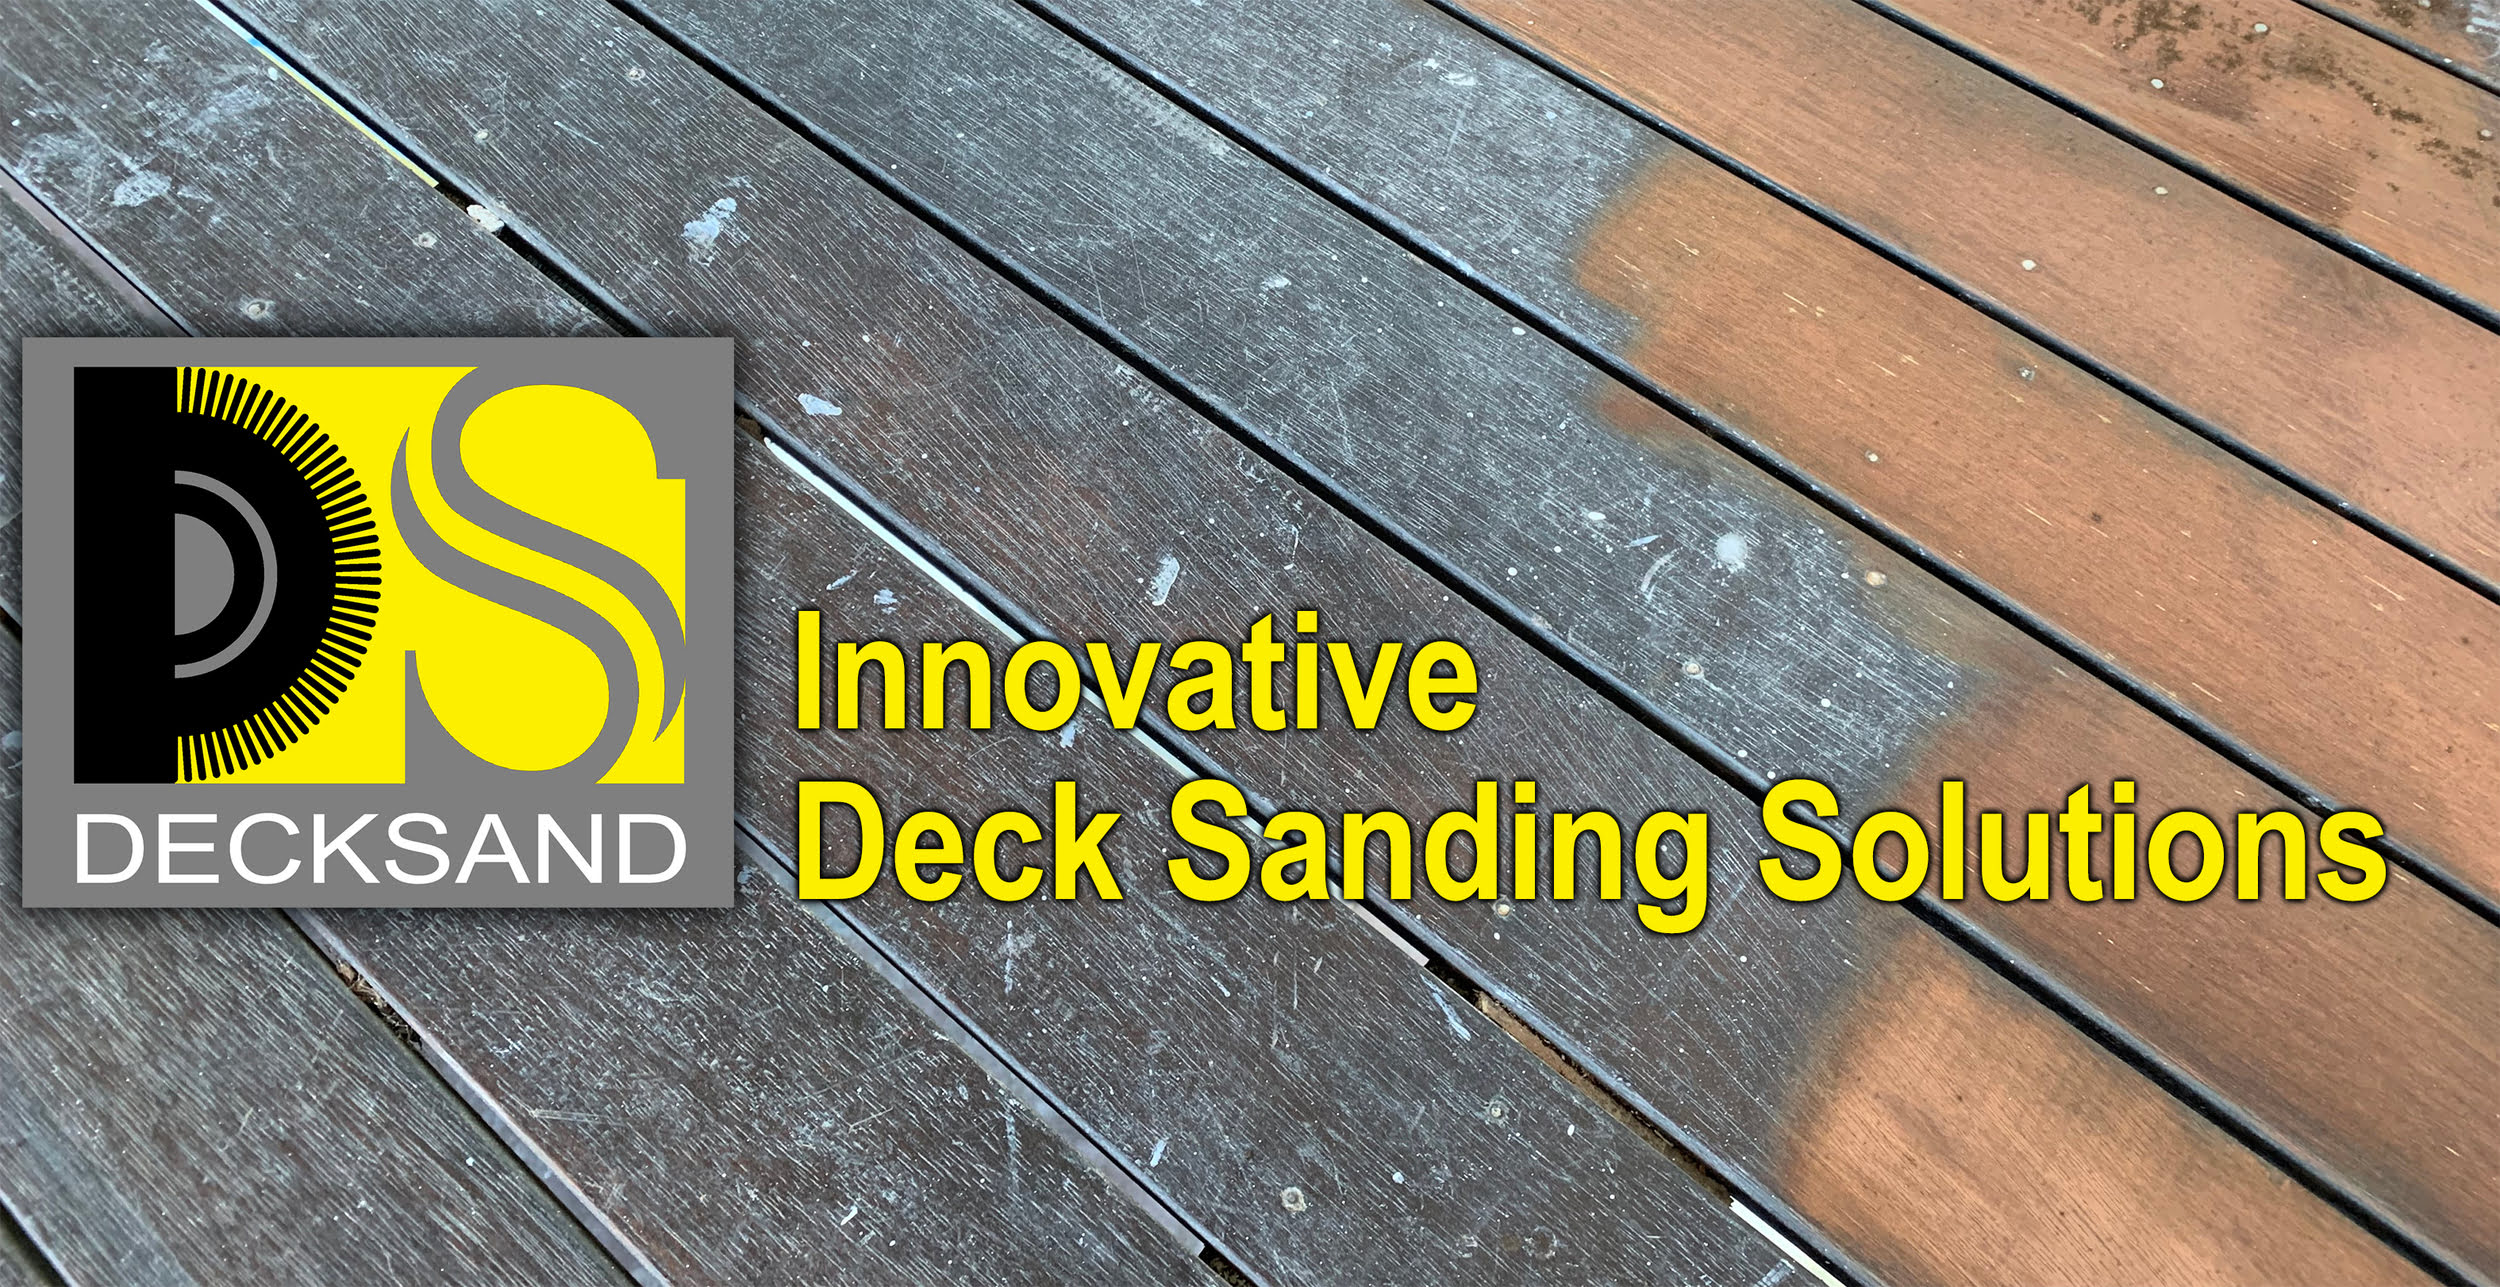 DECKSAND – Innovative Deck Sanding Solutions